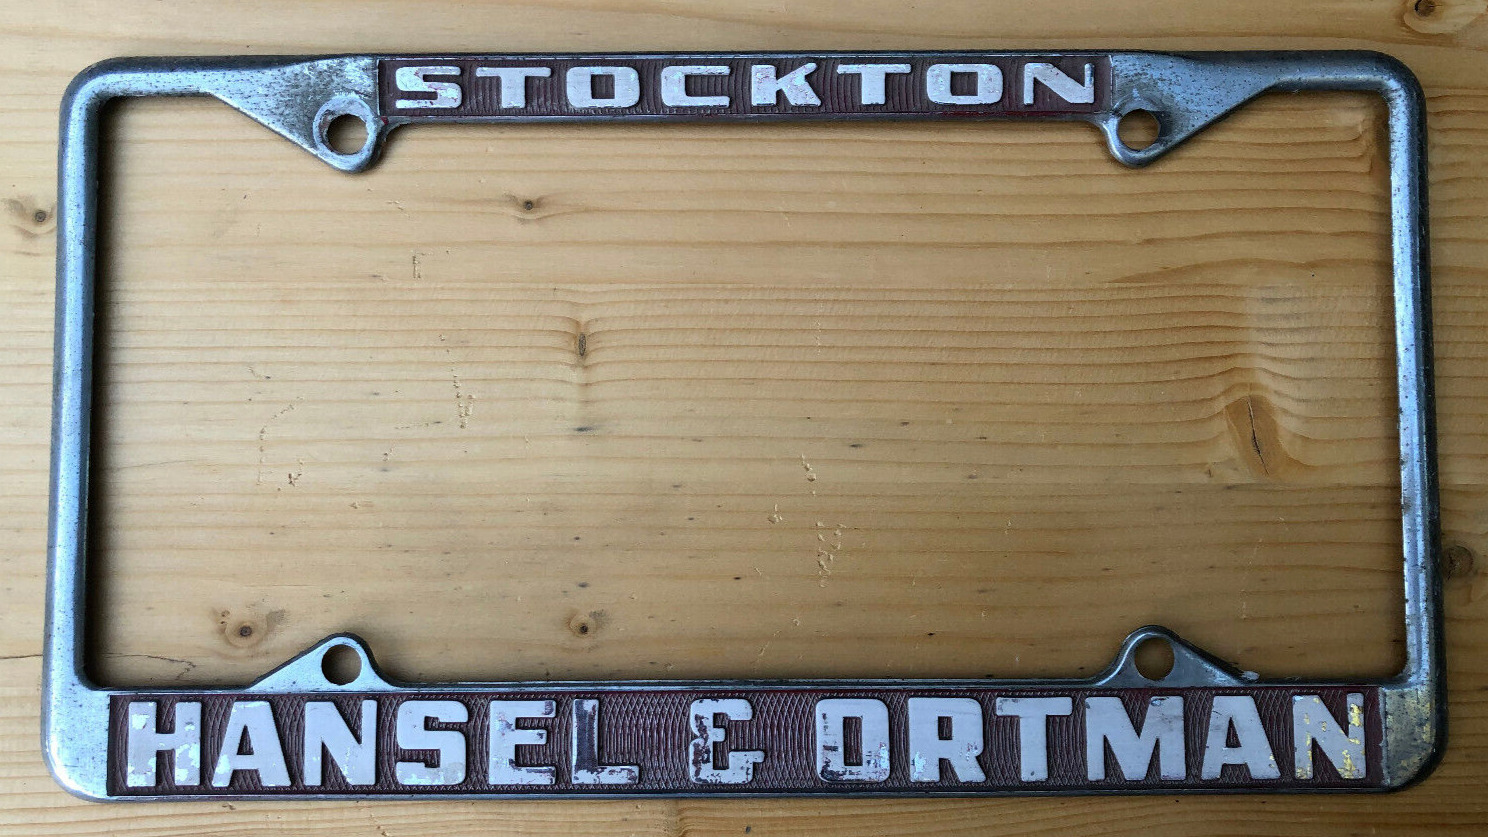 Vintage Stockton Hansel & Ortman Dealership Metal License Plate Frame California